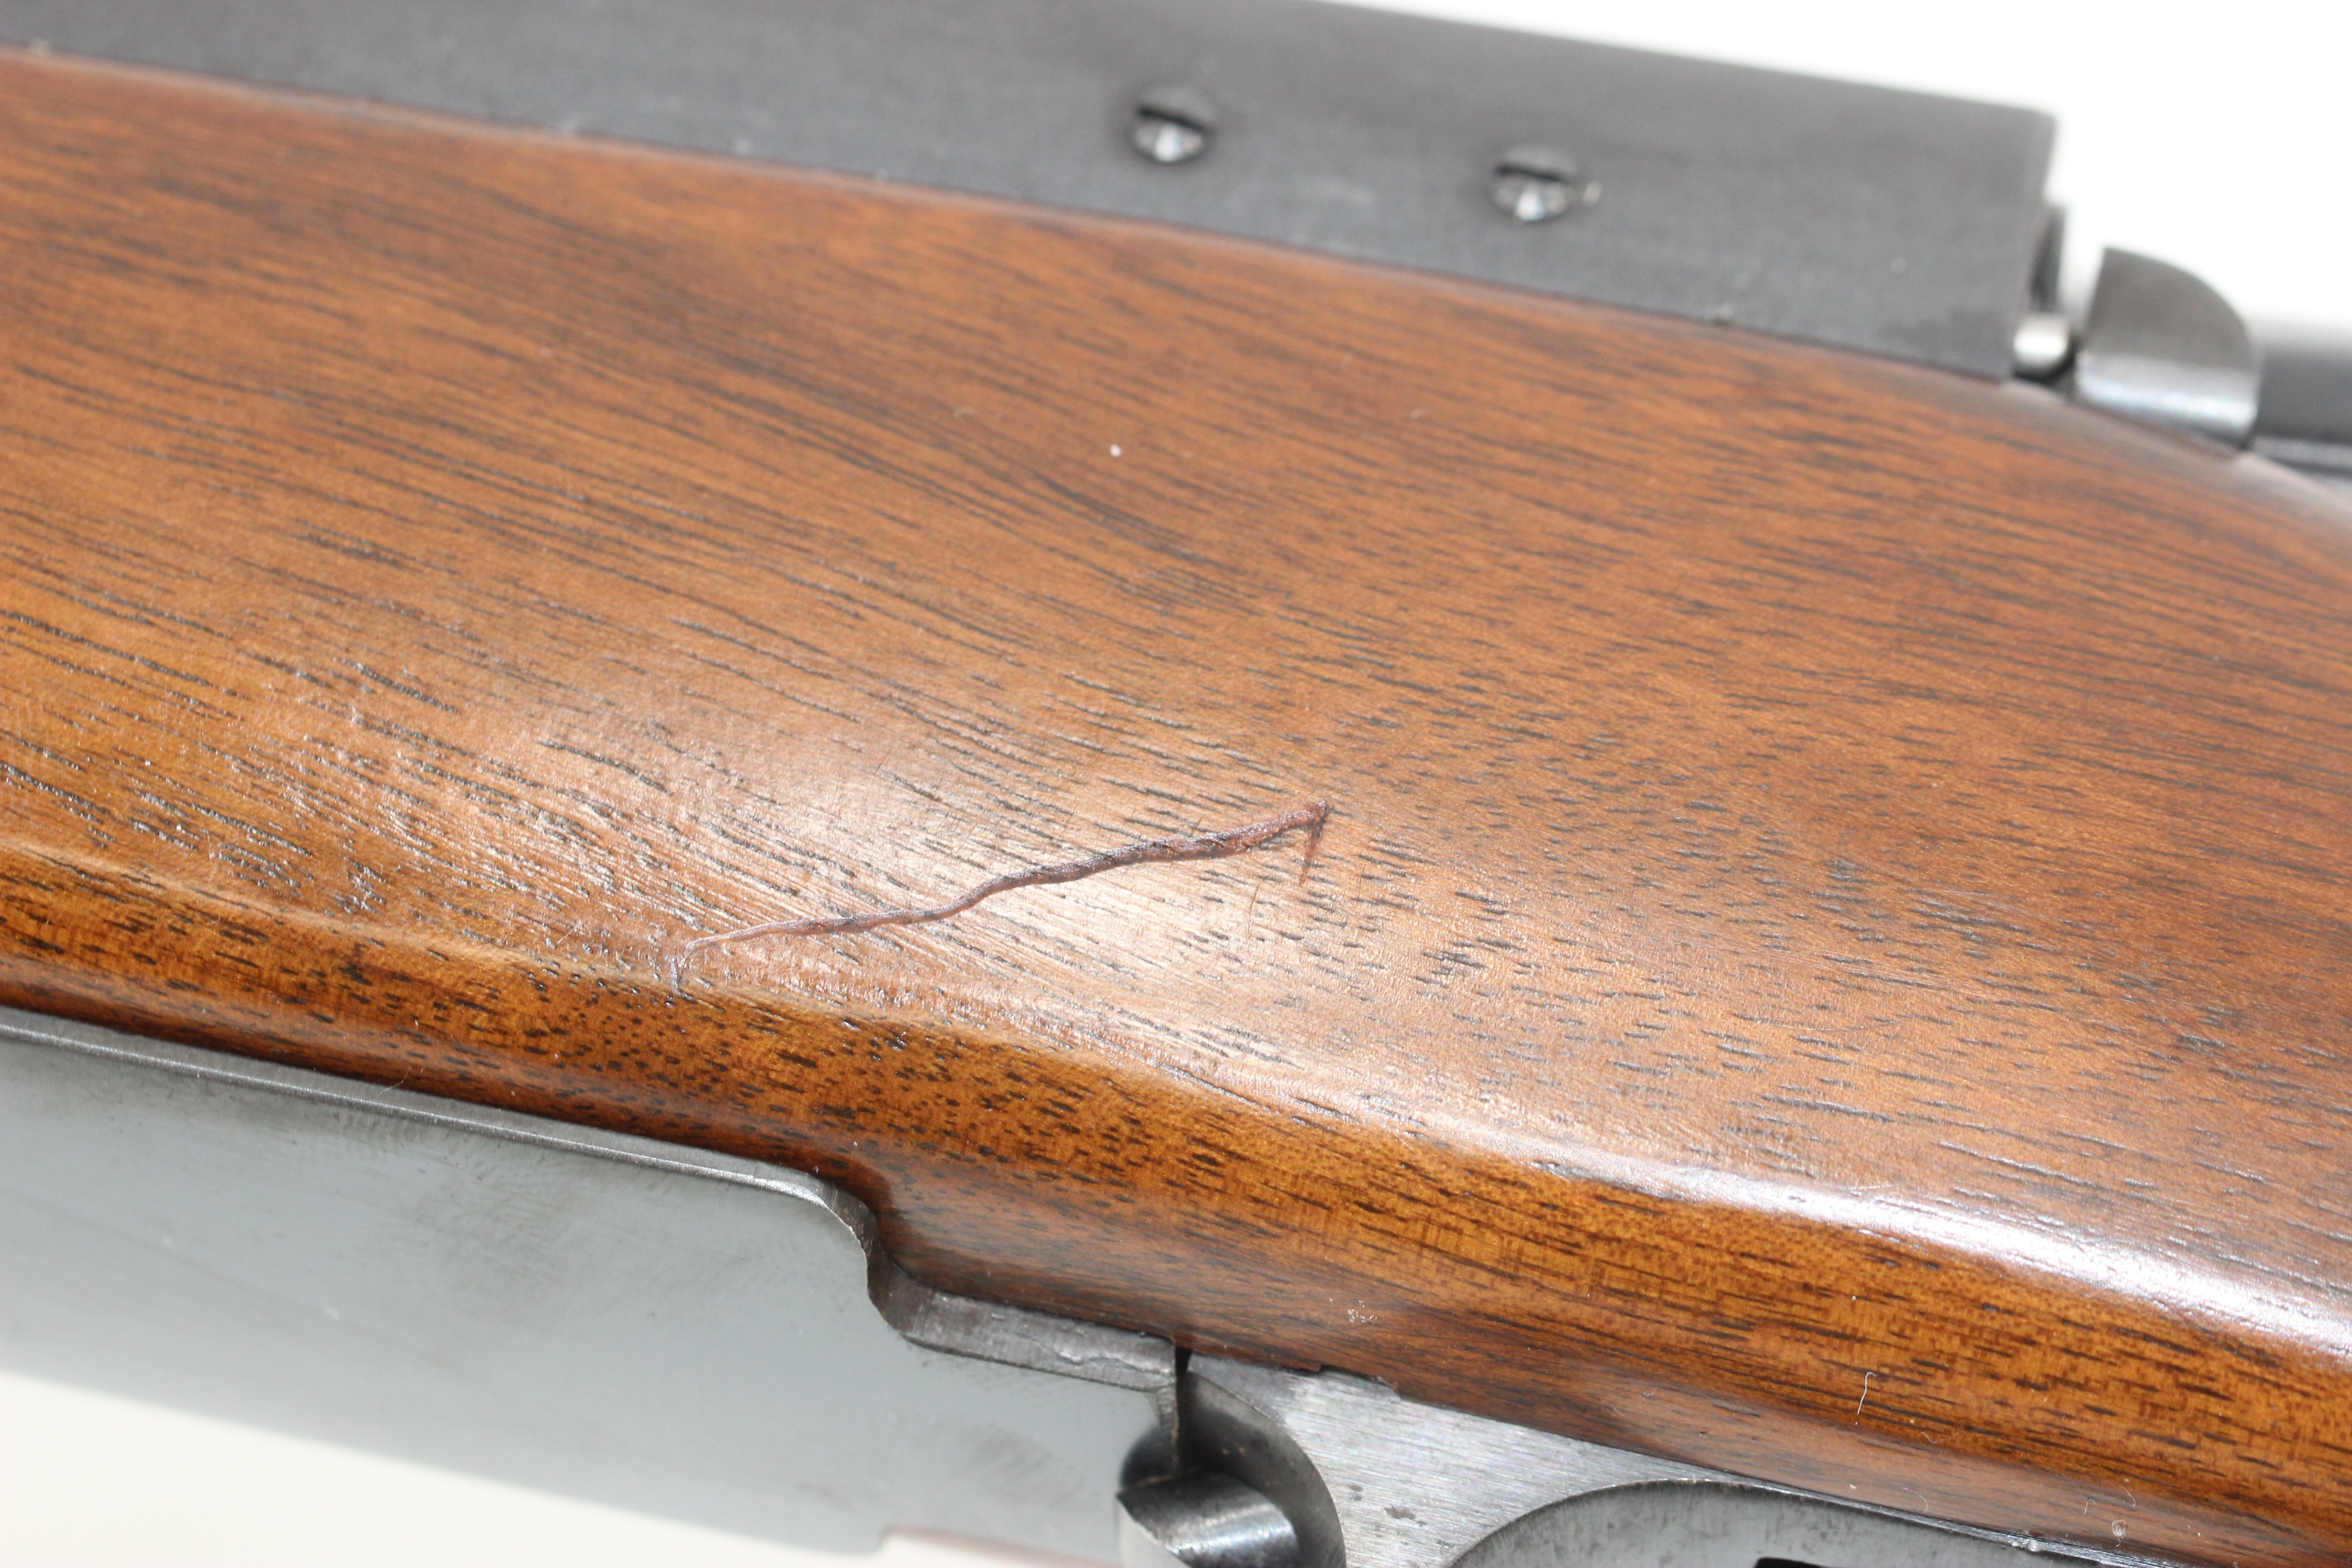 .220 Swift Winchester Varmint Rifle - 1963